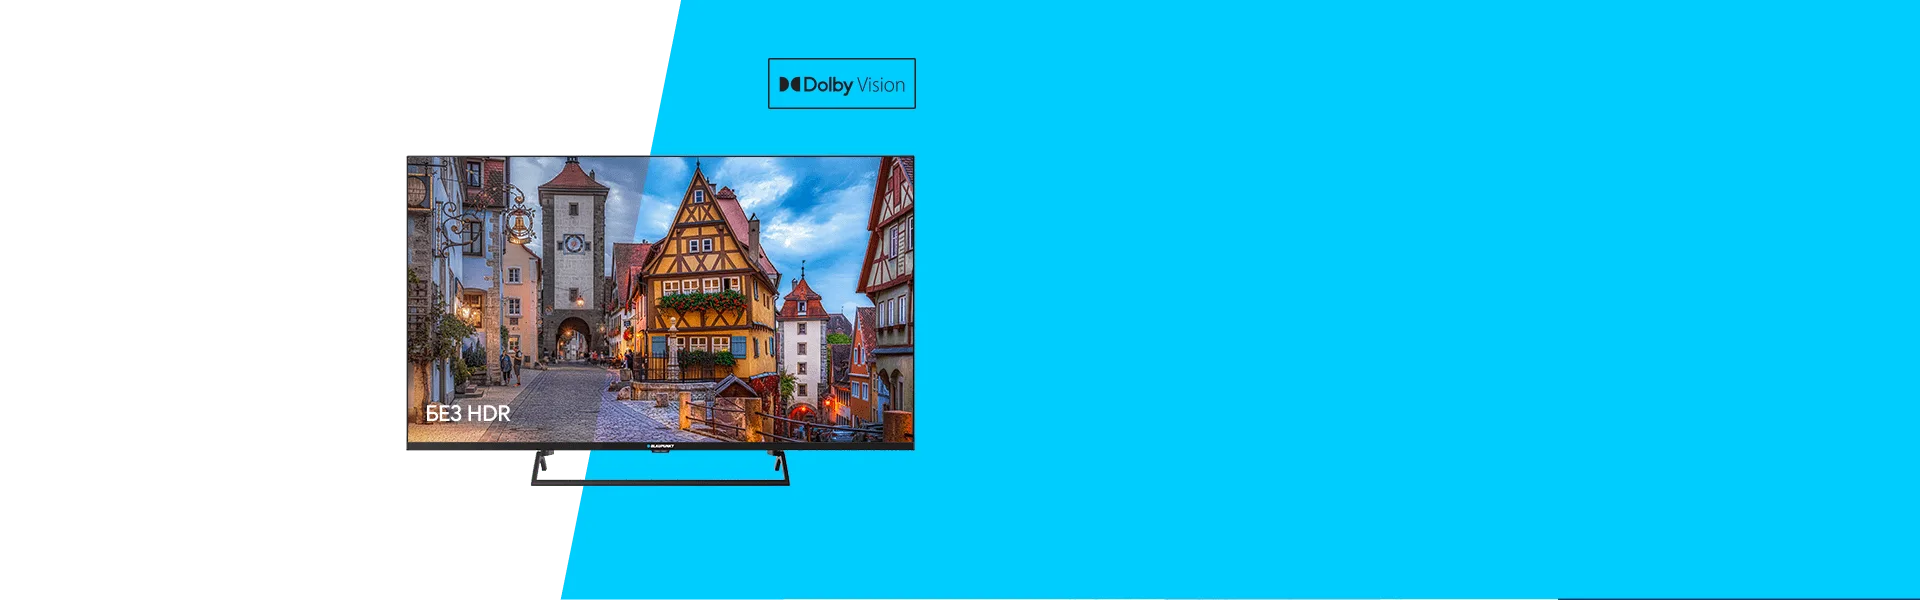 UHD 4K Android TV Blaupunkt 55UB7000